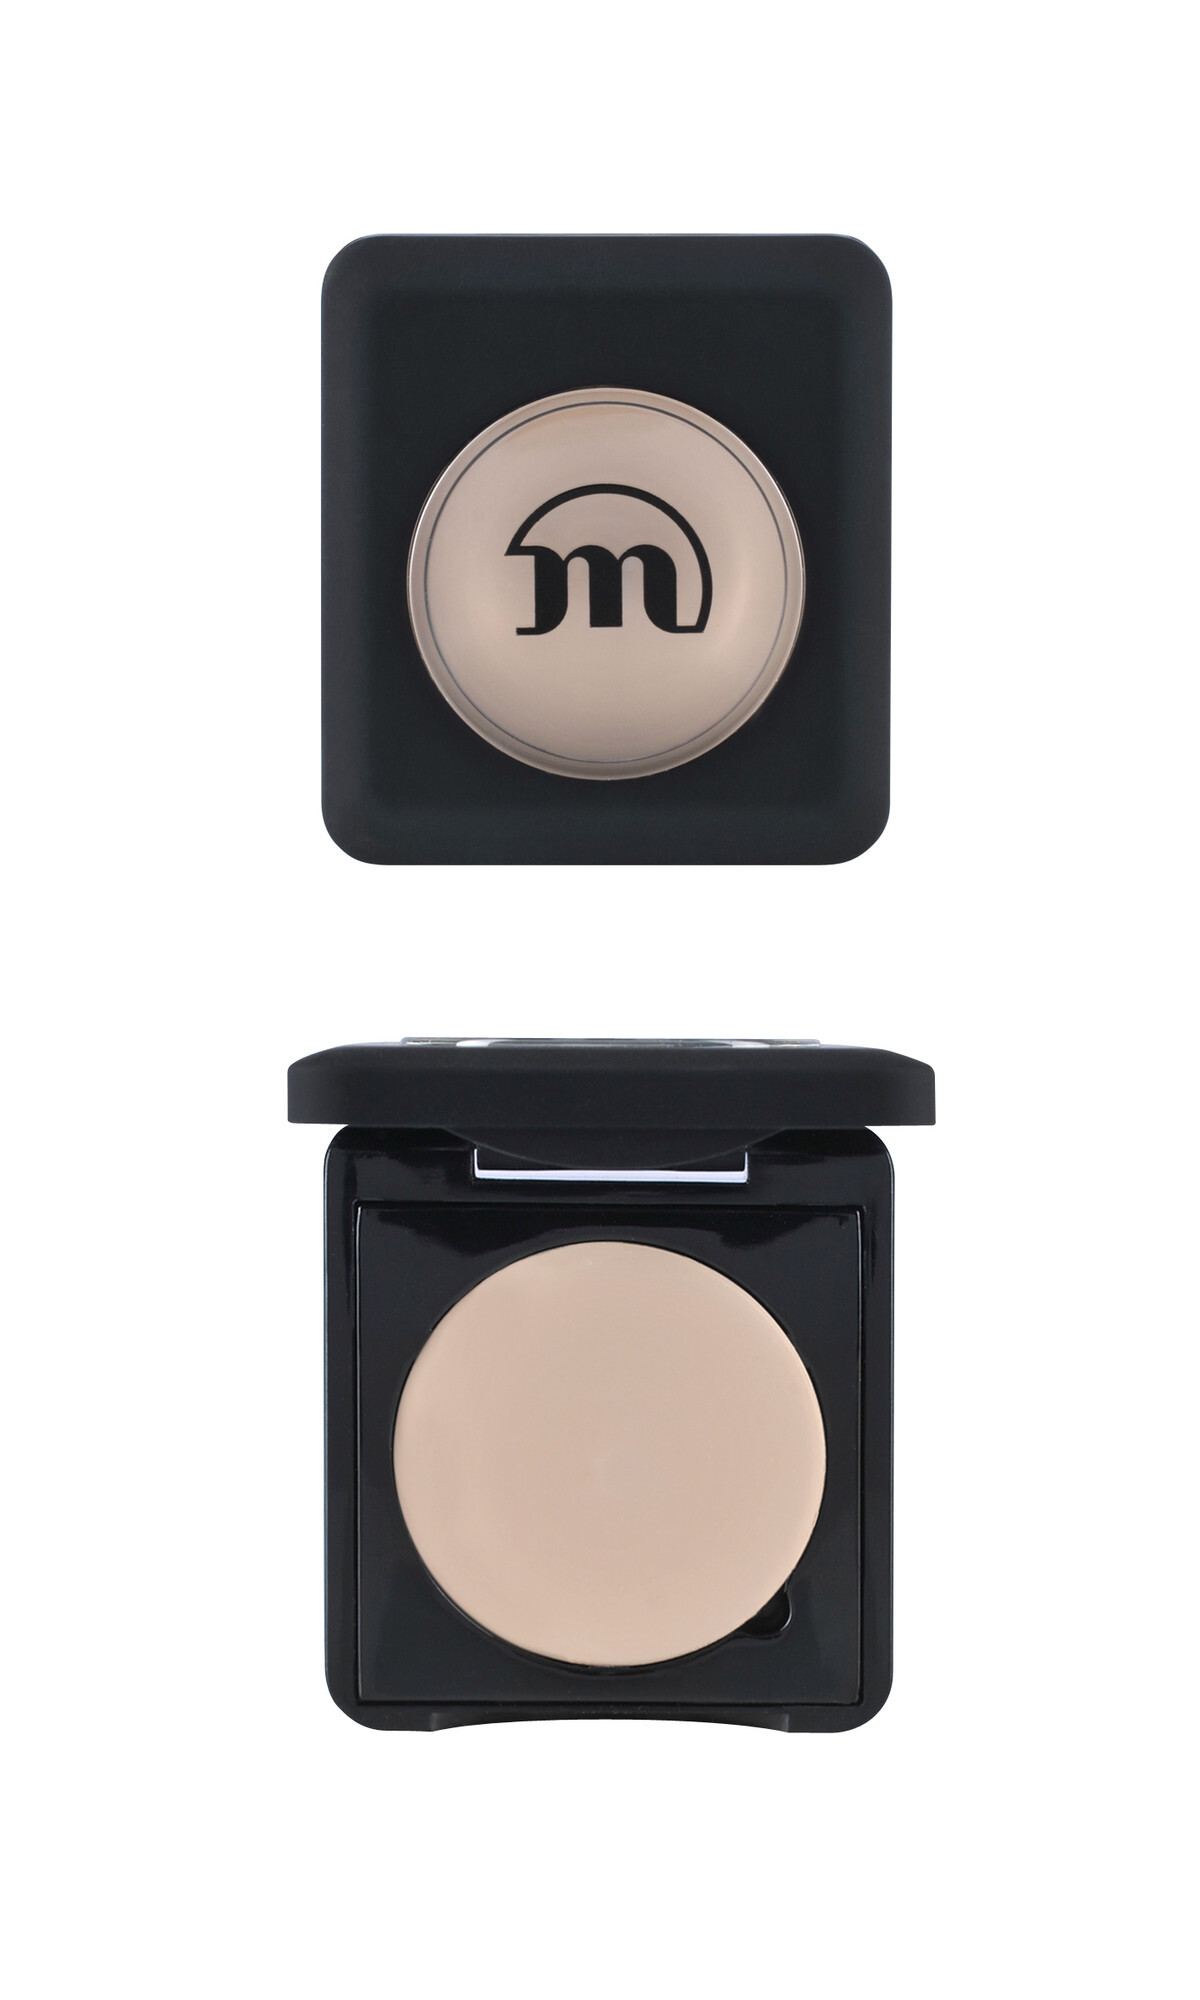 Make-up Studio Concealer in Box Light beige 1 Light beige